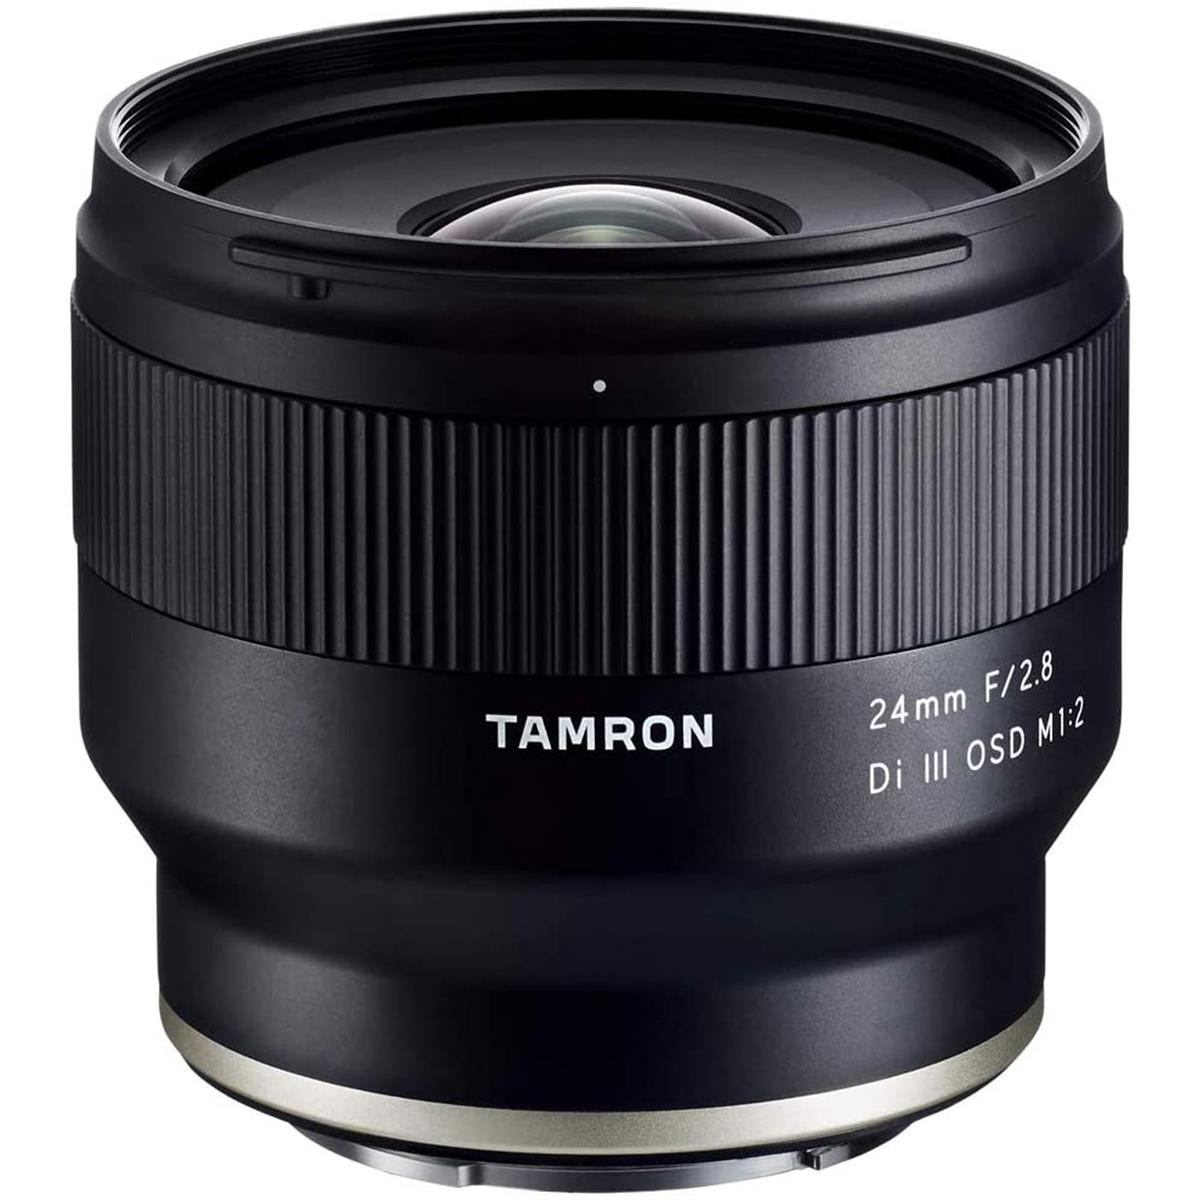 Tamron 24mm f/2.8 Di III OSD M 1:2 Lens  for Sony E